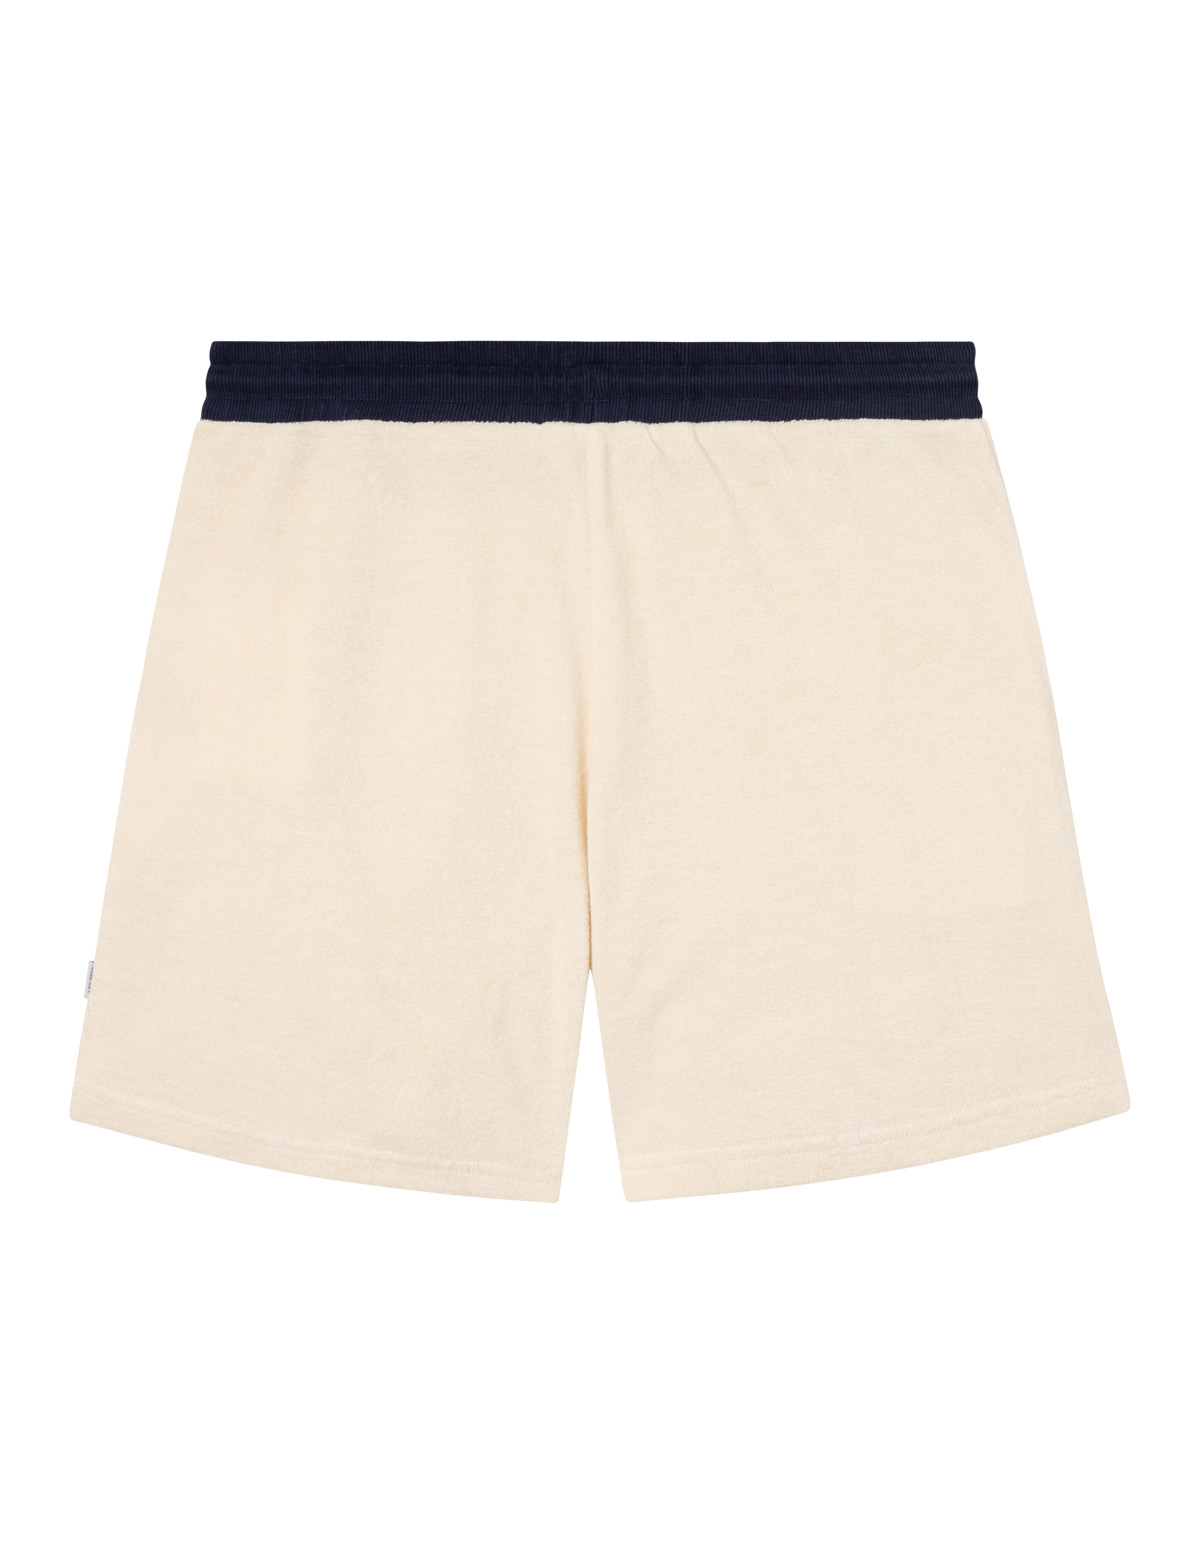 Javier Towel Sports Shorts